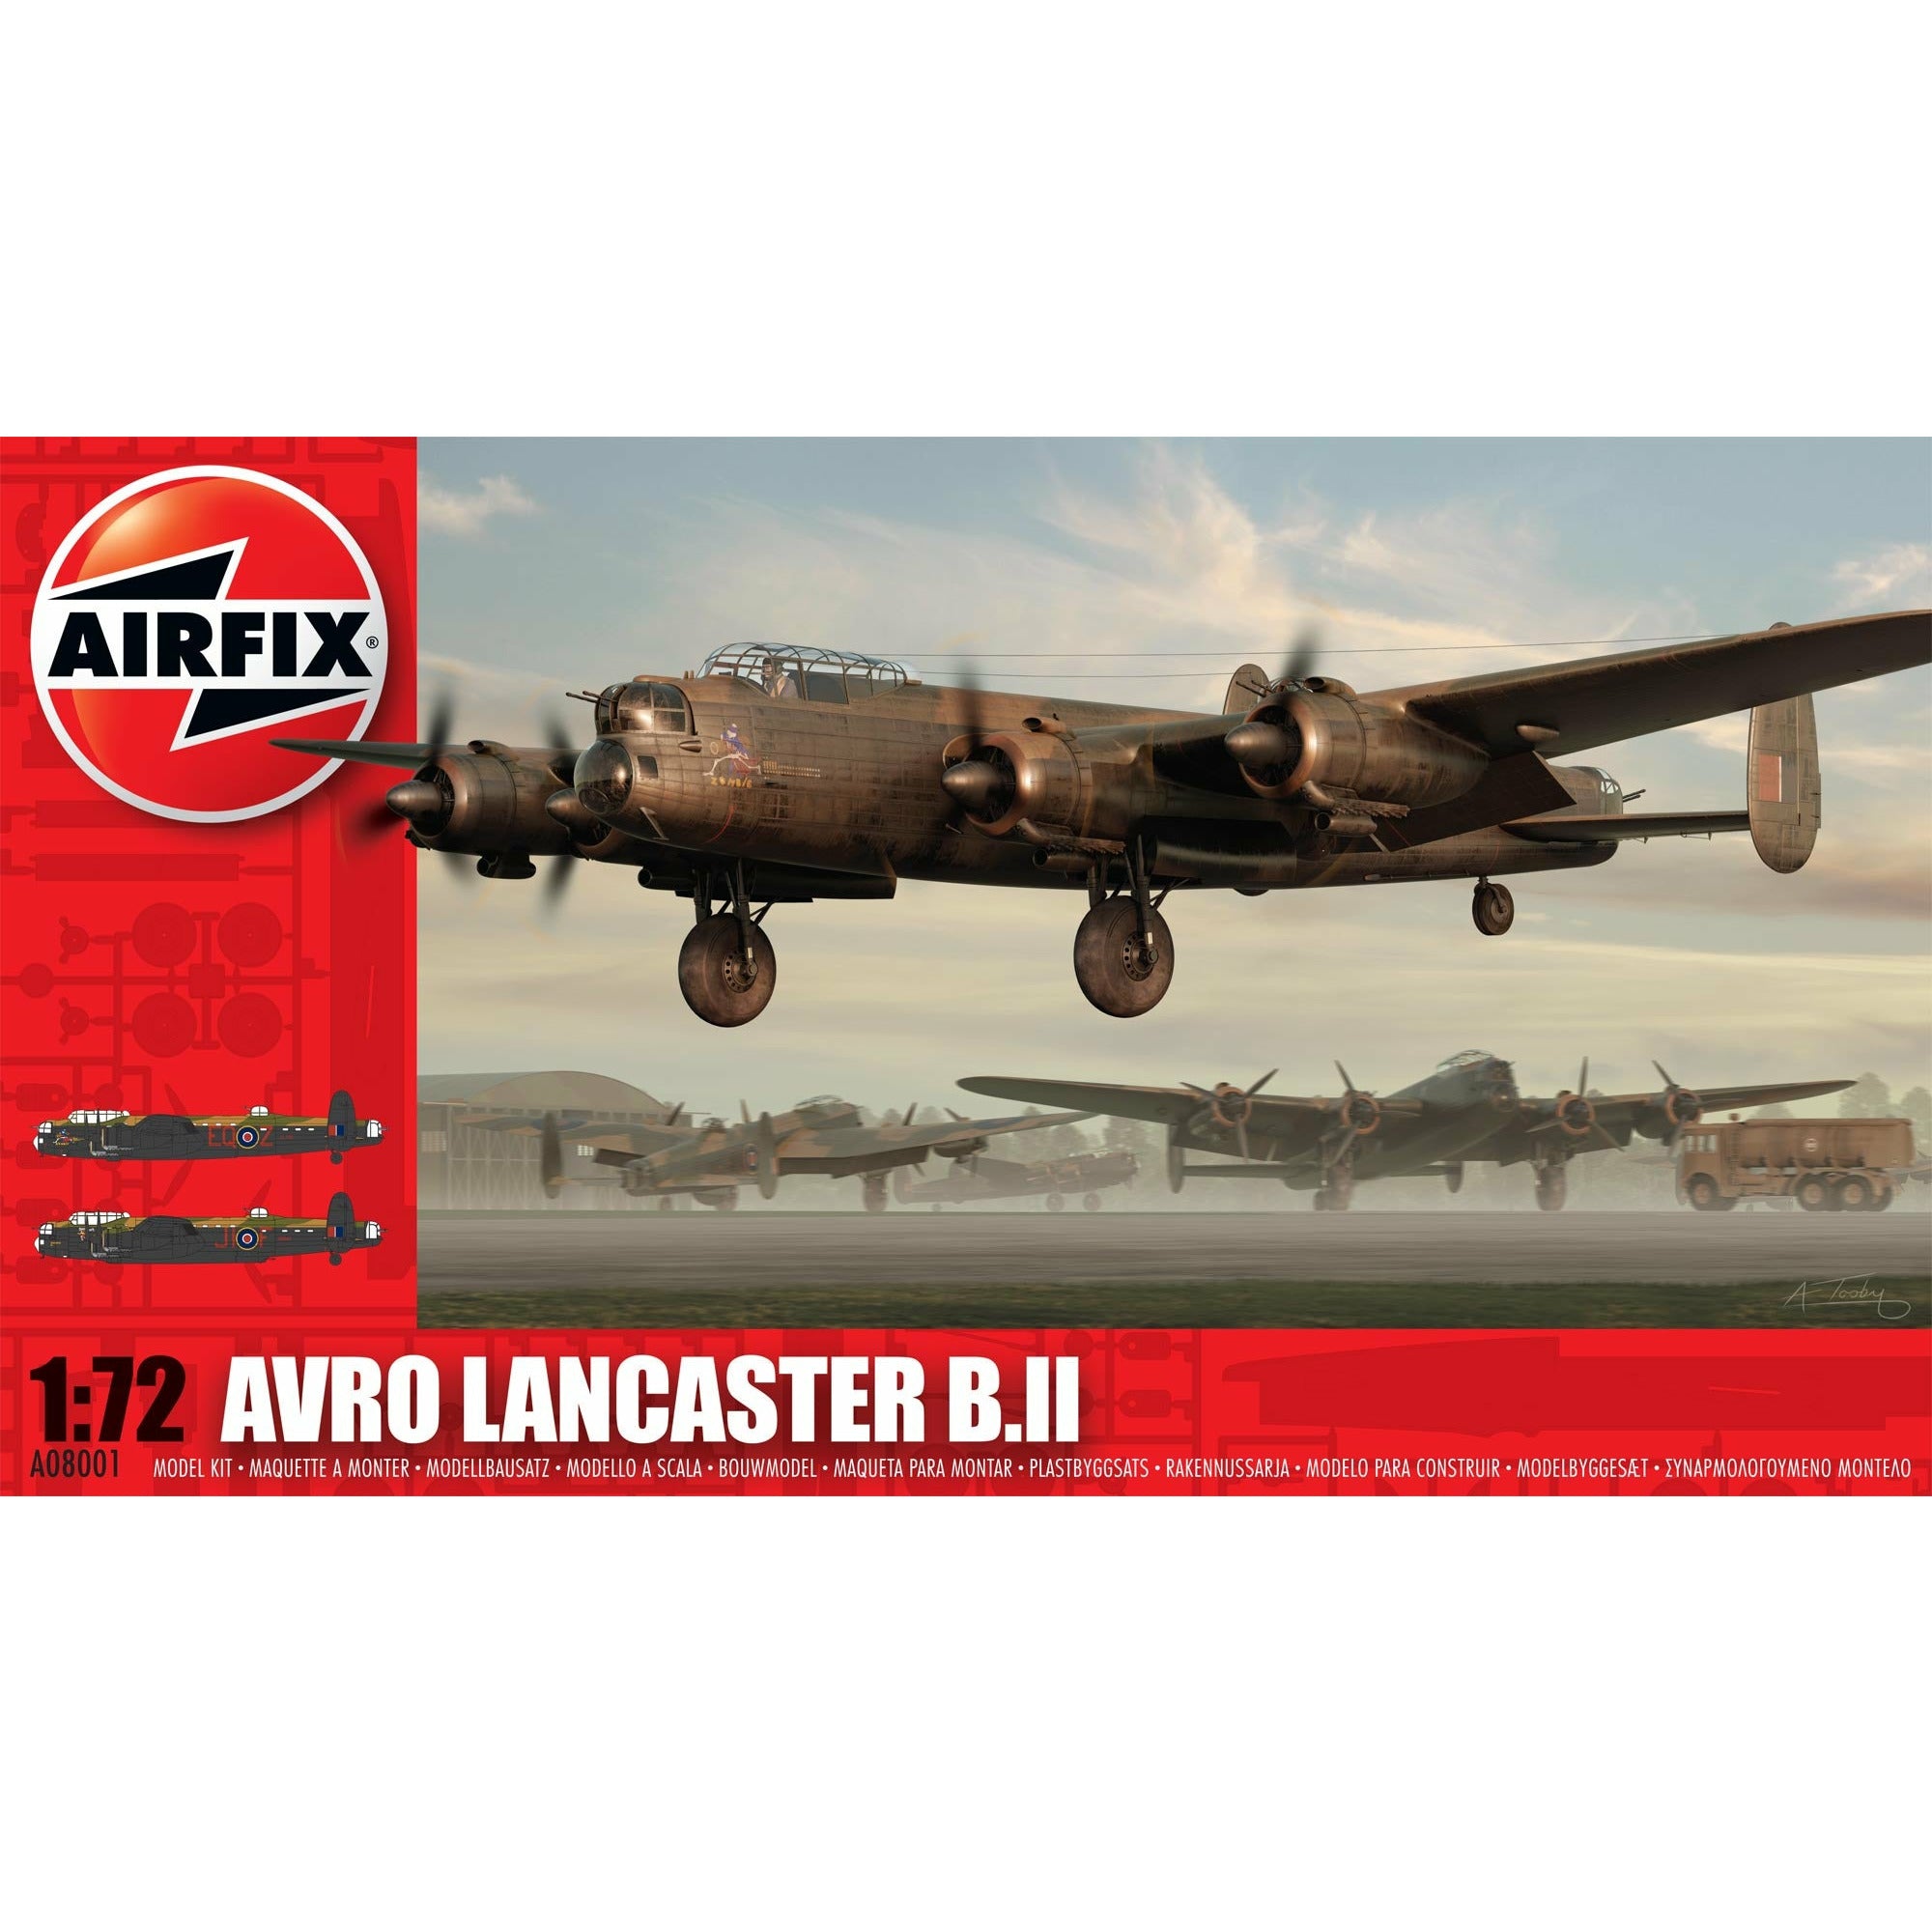 Avro Lancaster B.II 1/72 #08001 by Airfix